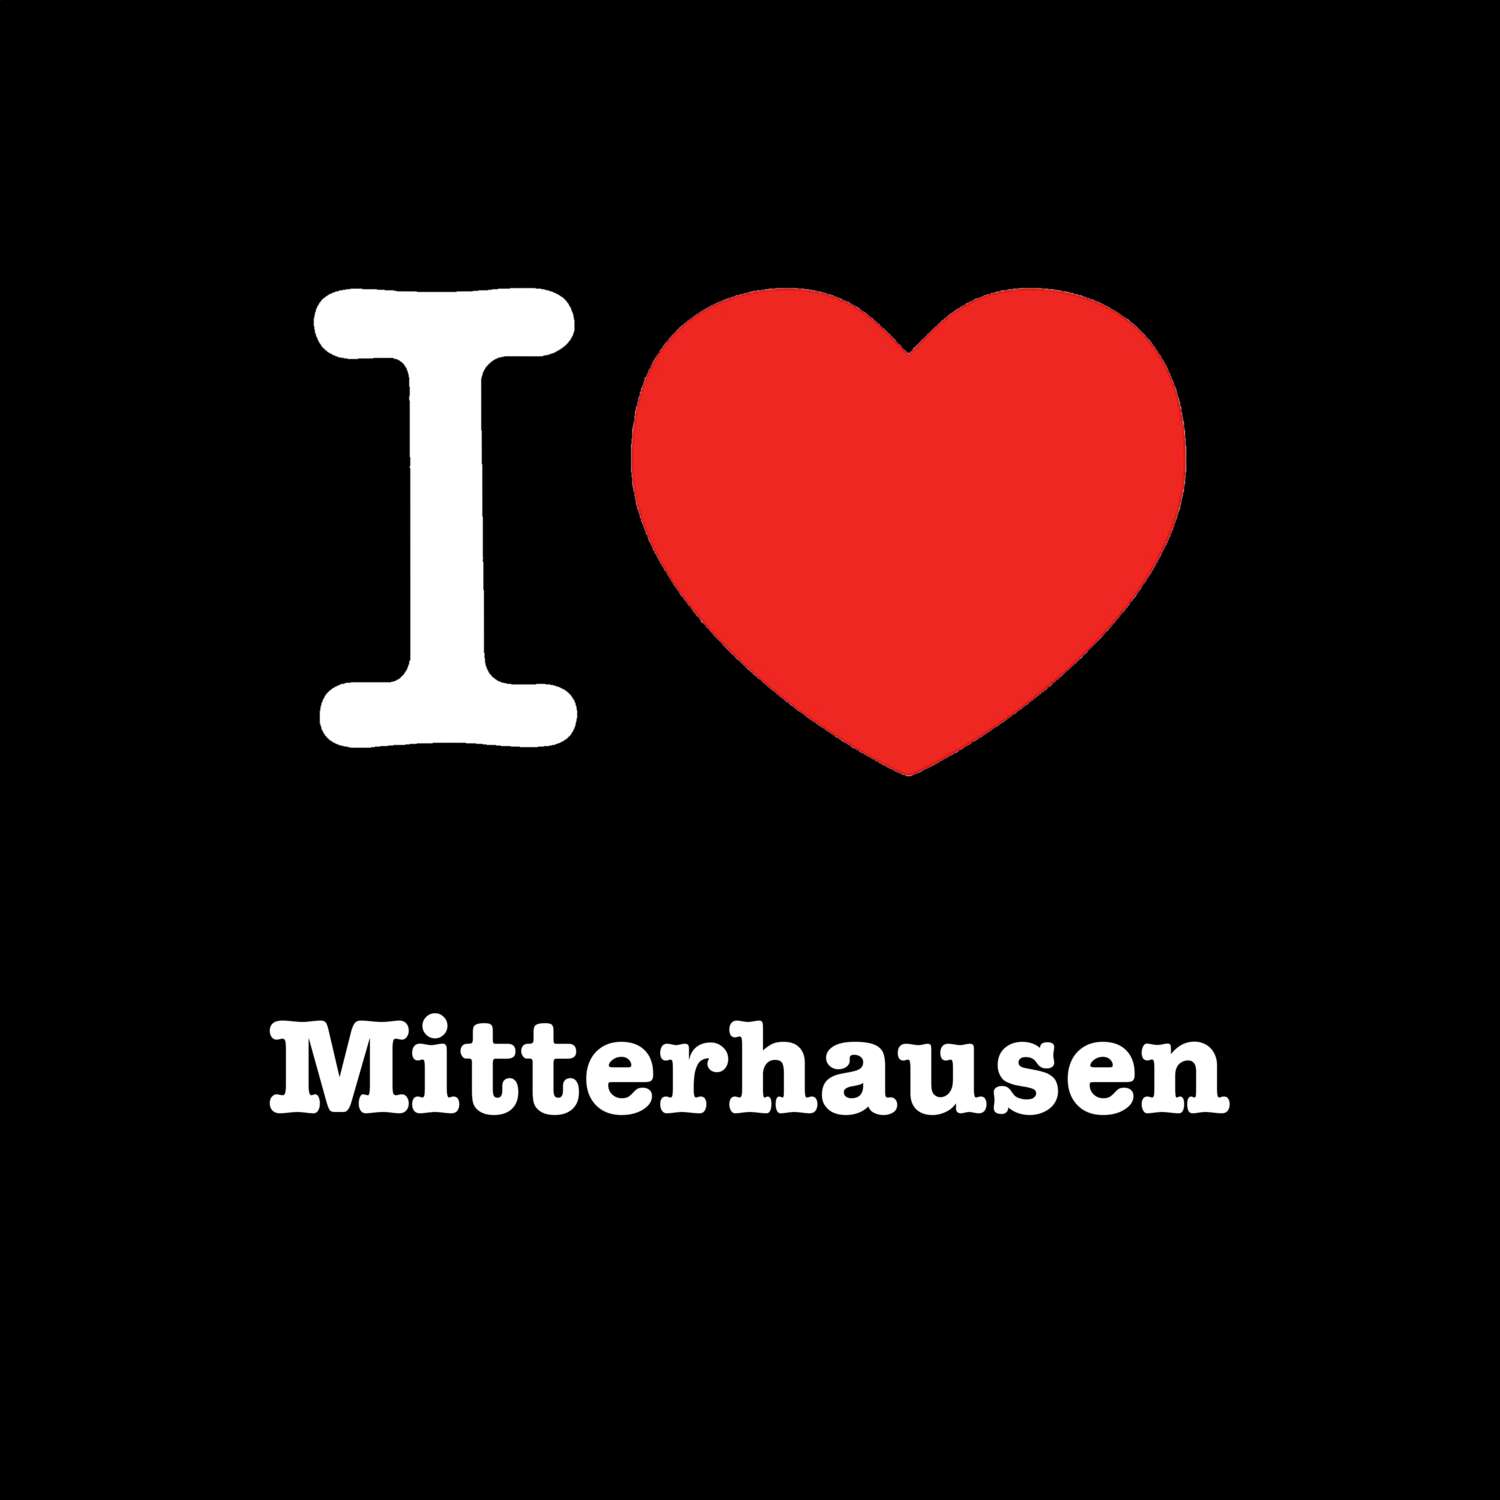 Mitterhausen T-Shirt »I love«